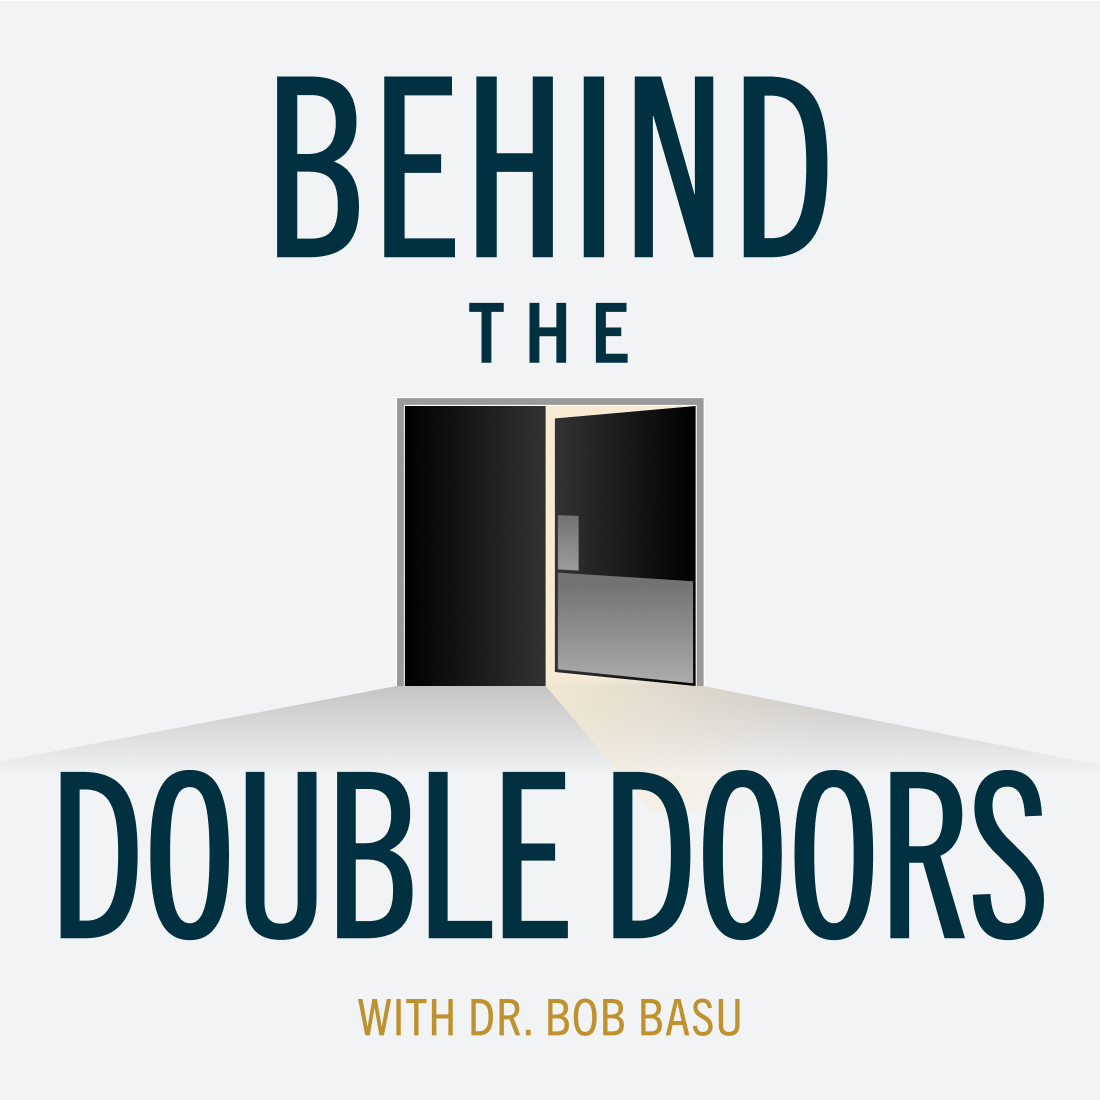 Behind the Double Doors with Dr. Bob Basu